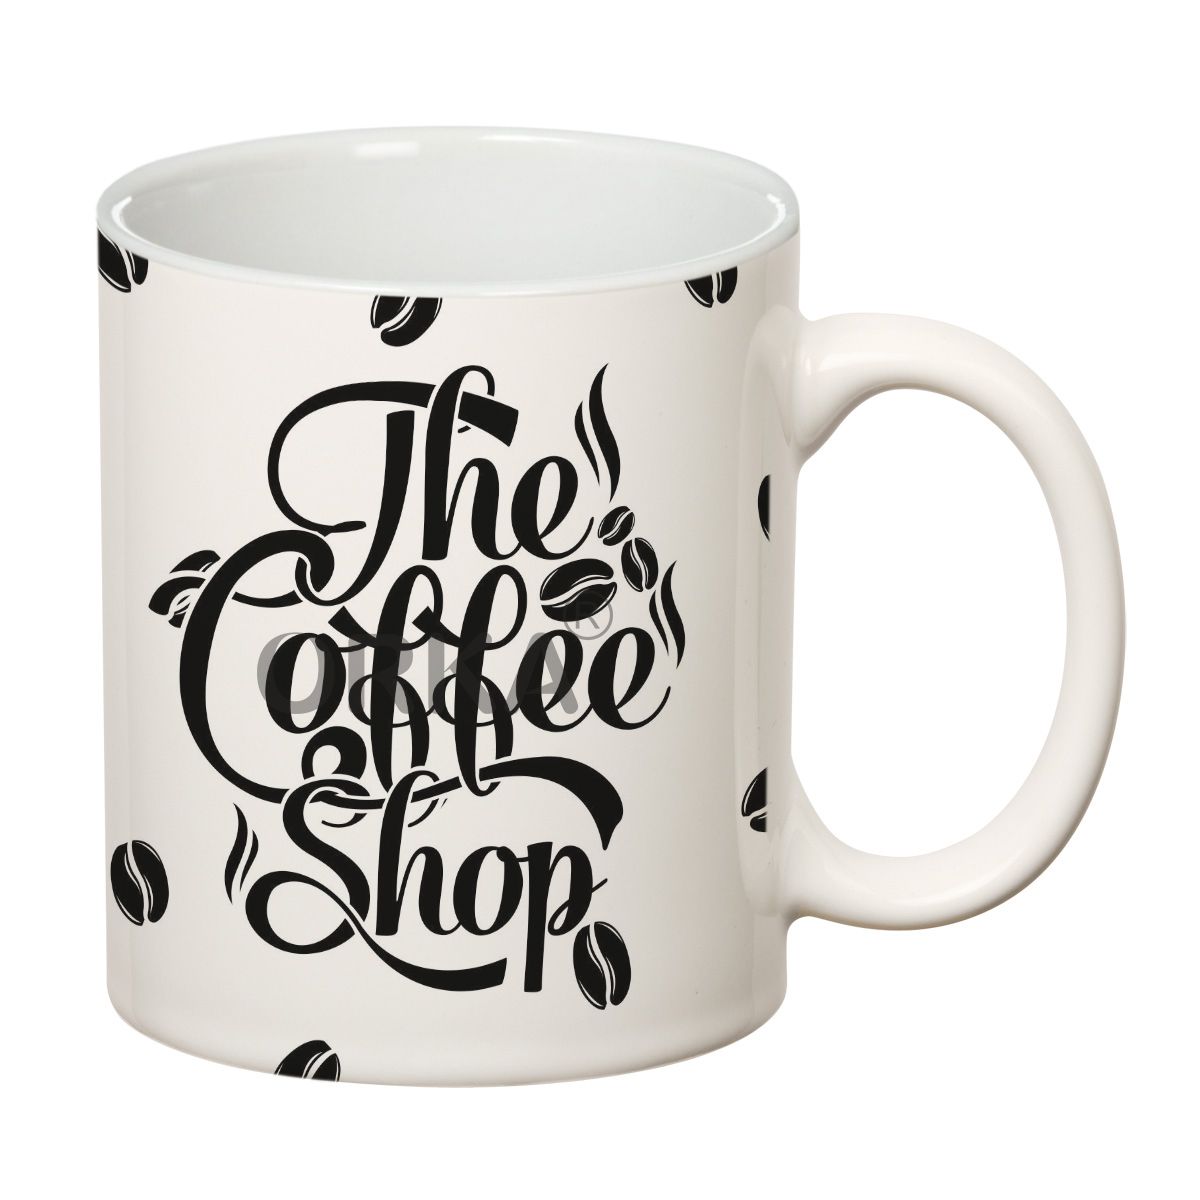 ORKA Coffee Mug Quotes Printed(The Coffee Shop) Theme 11 Oz   